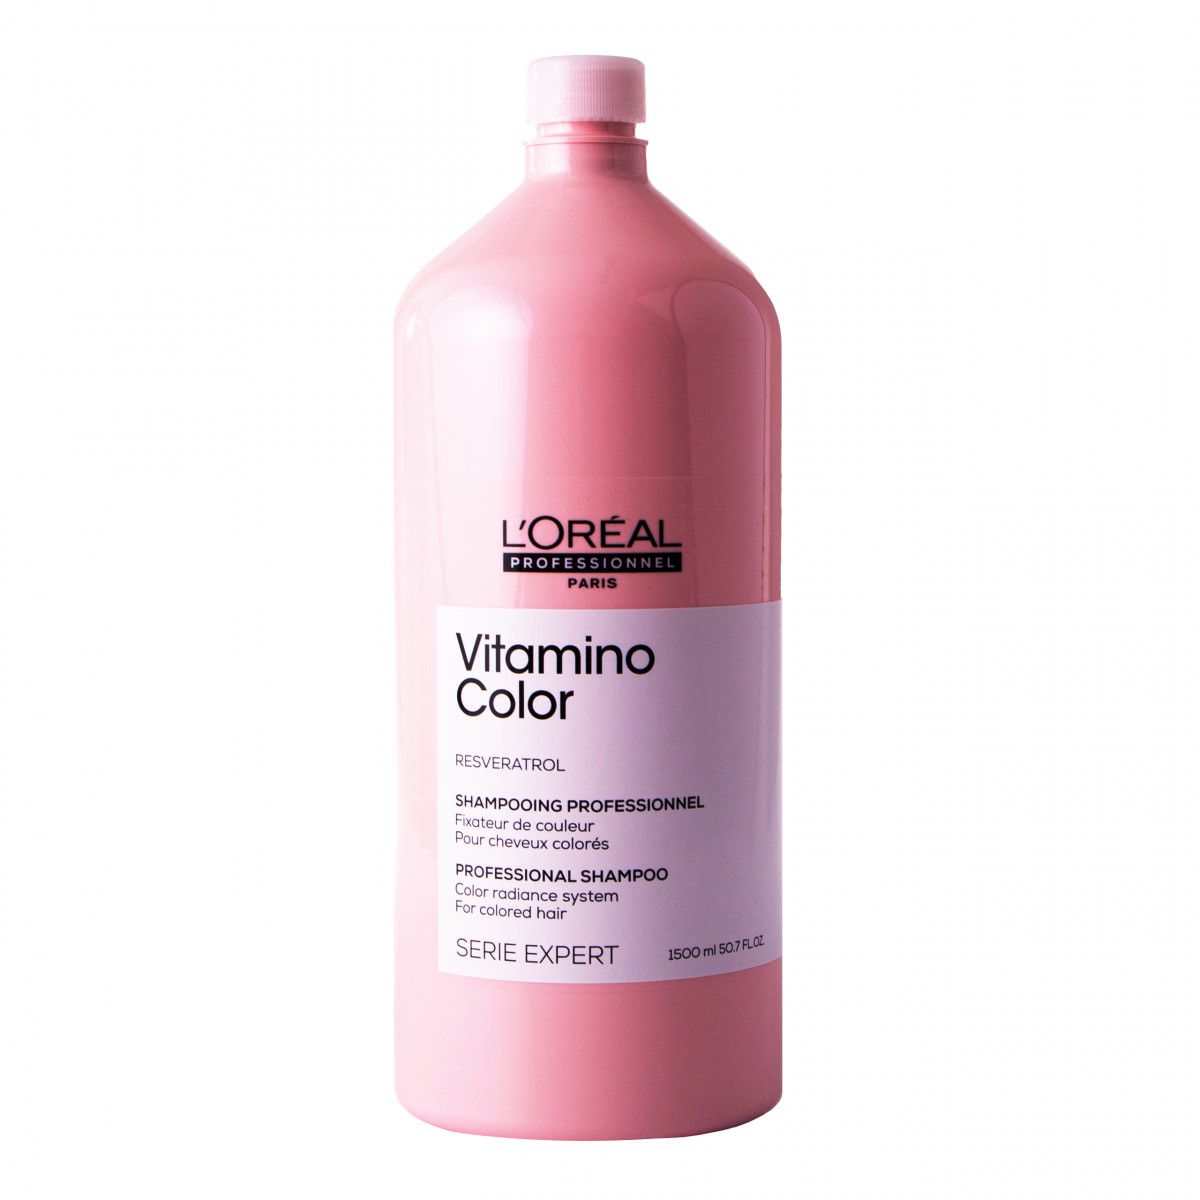 loreal vitamino color aox szampon cena próbka